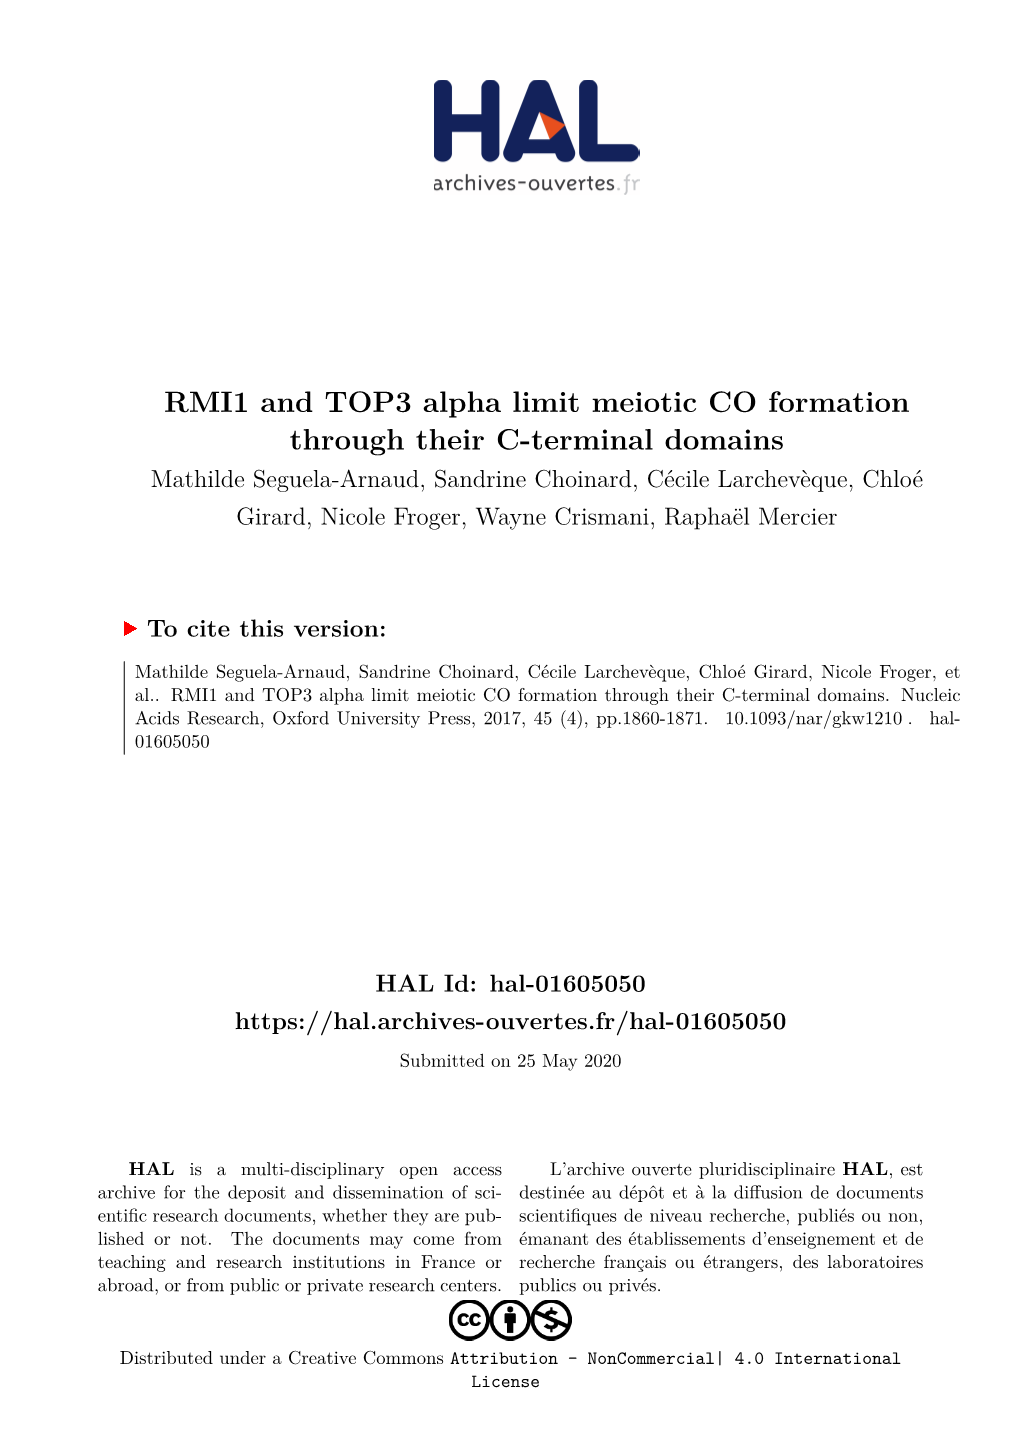 RMI1 and TOP3 Alpha Limit Meiotic CO Formation Through Their C-Terminal Domains